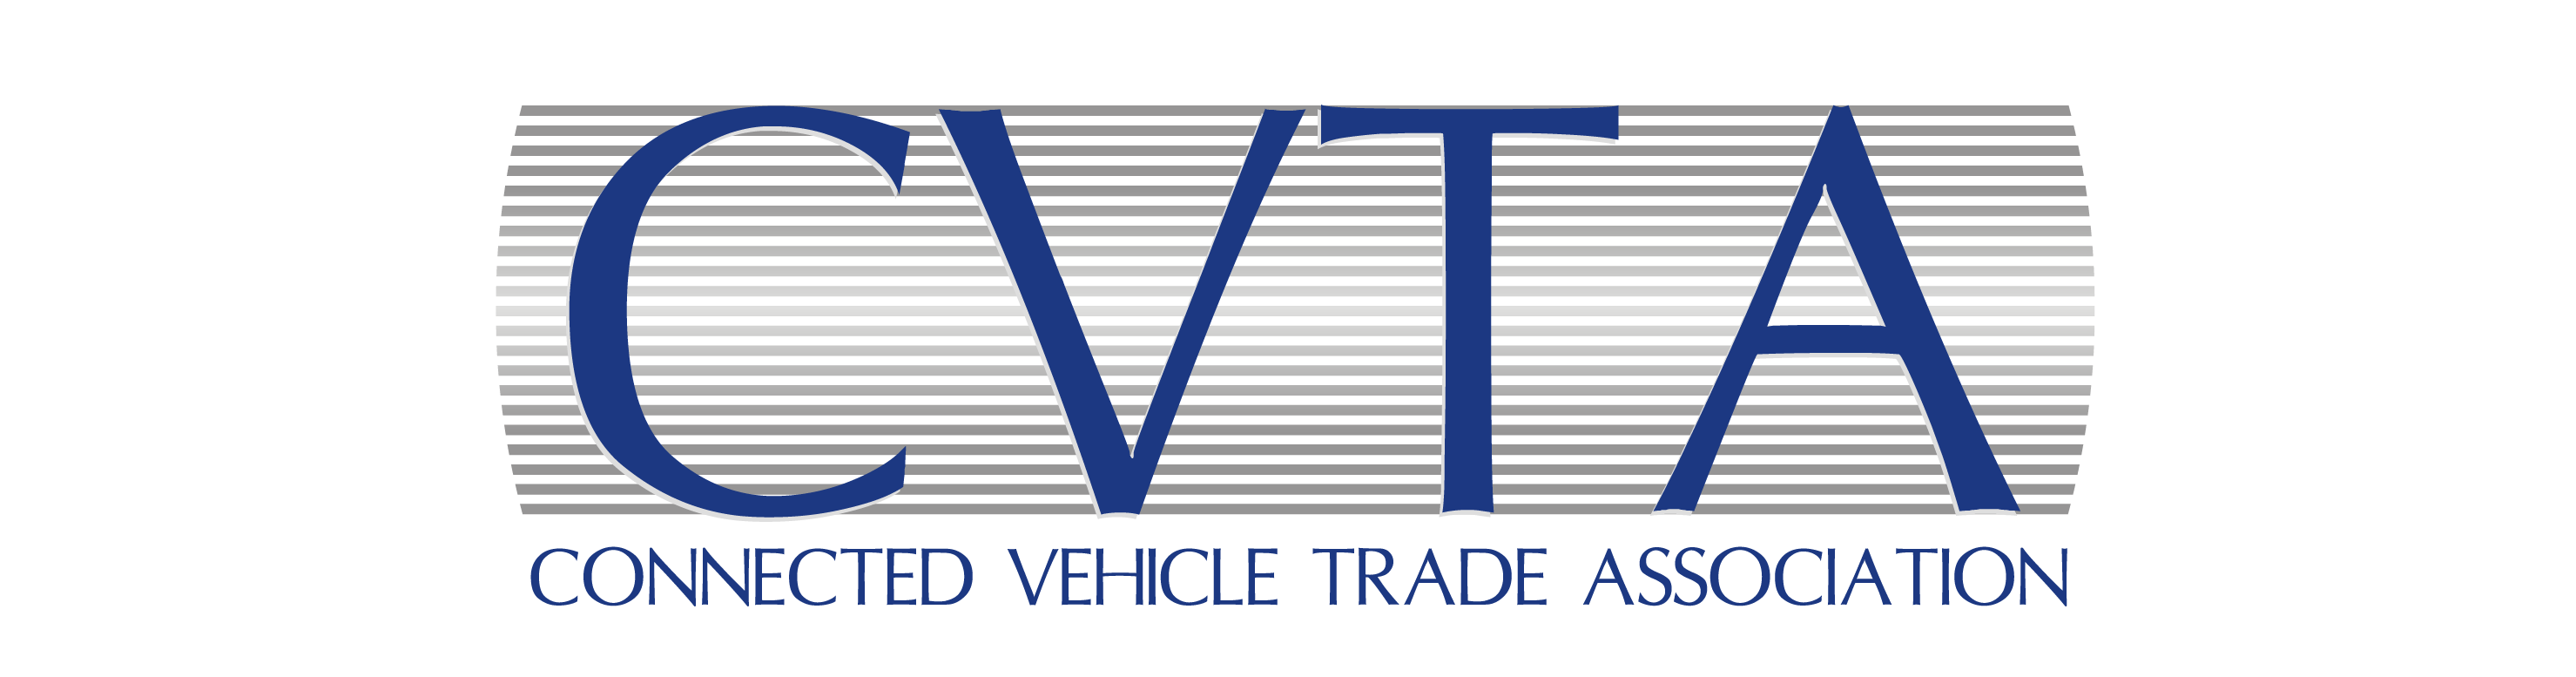 Connected Vehicle Trade Association – CVTA